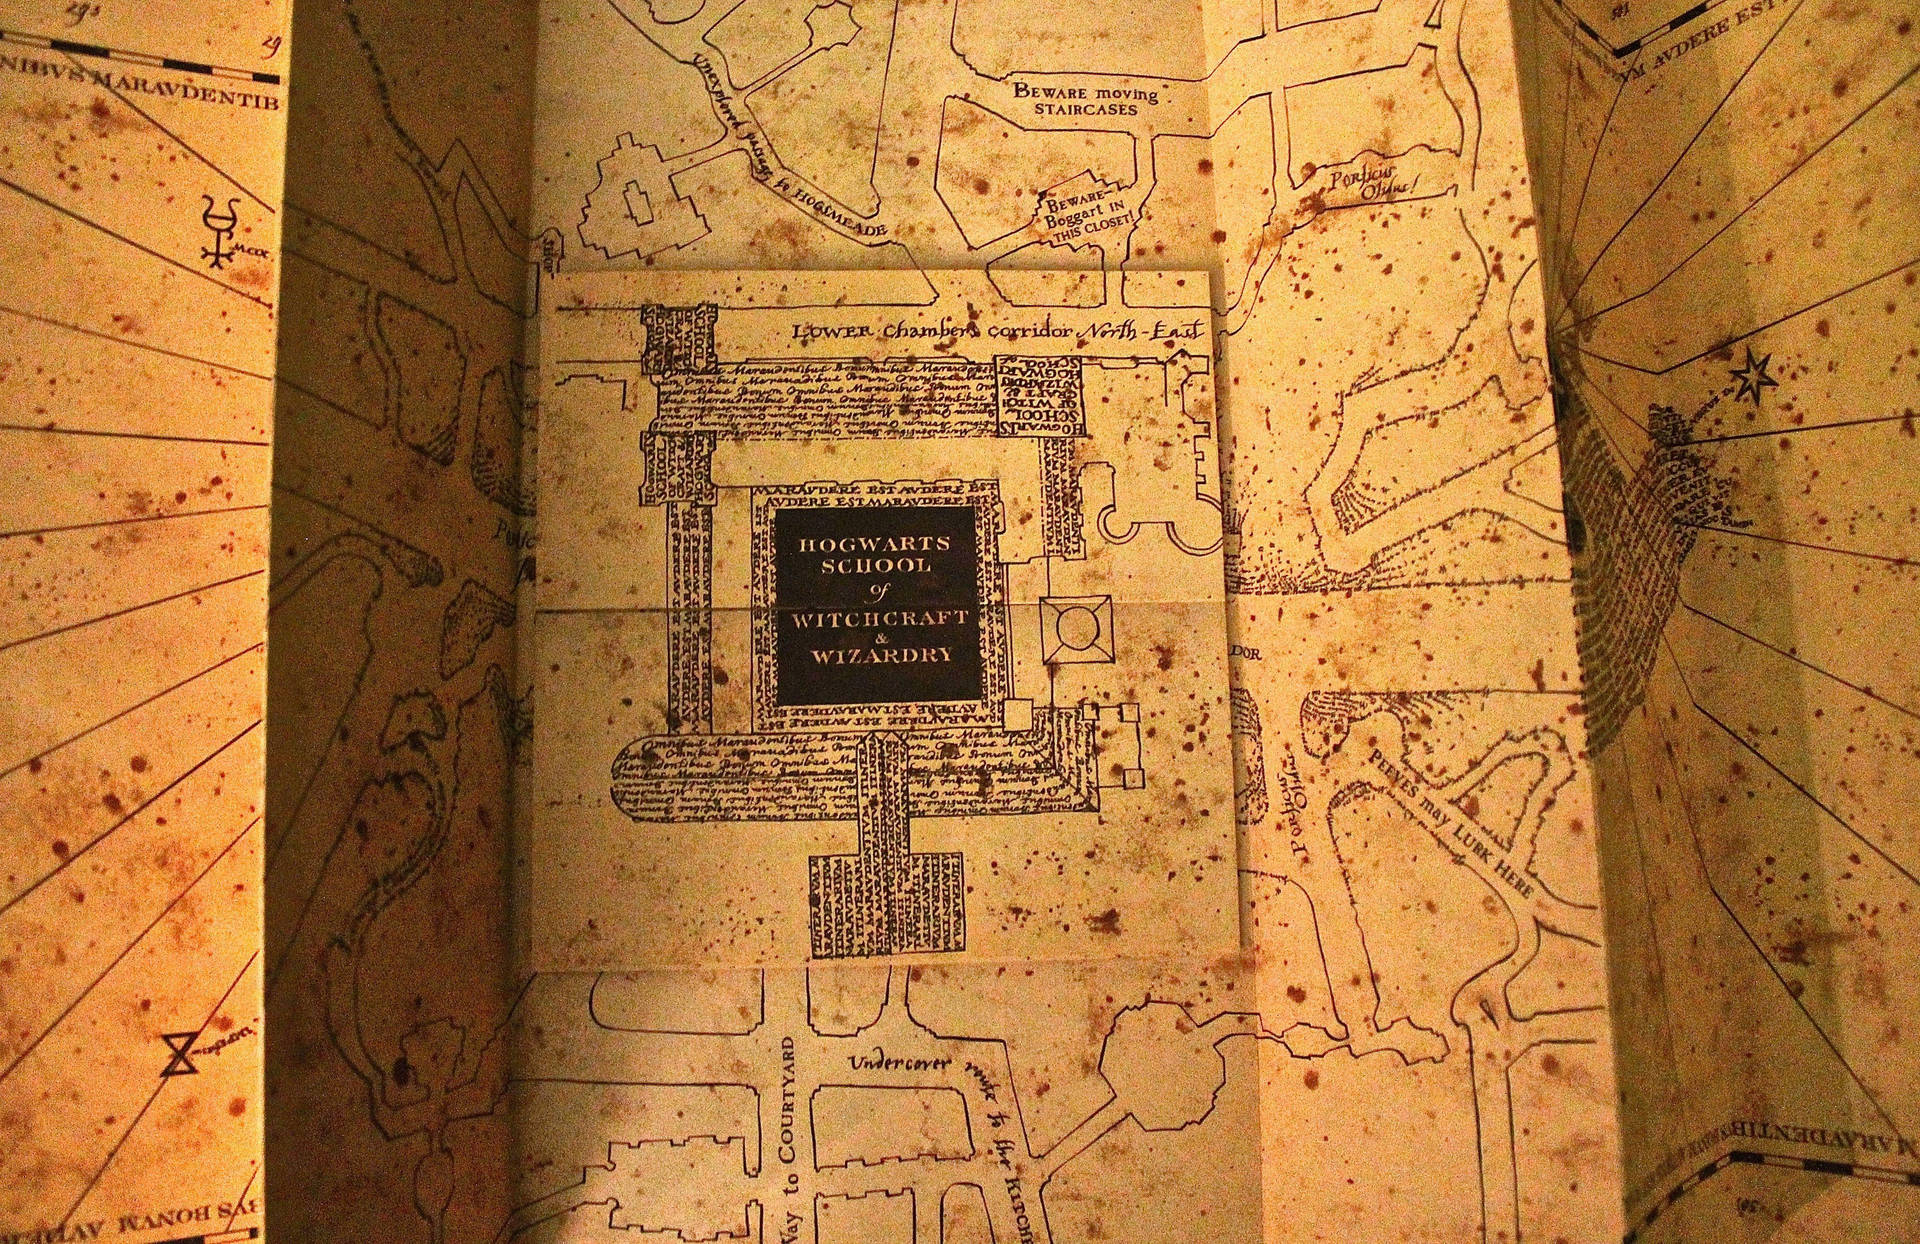 harry potter marauders map wallpaper